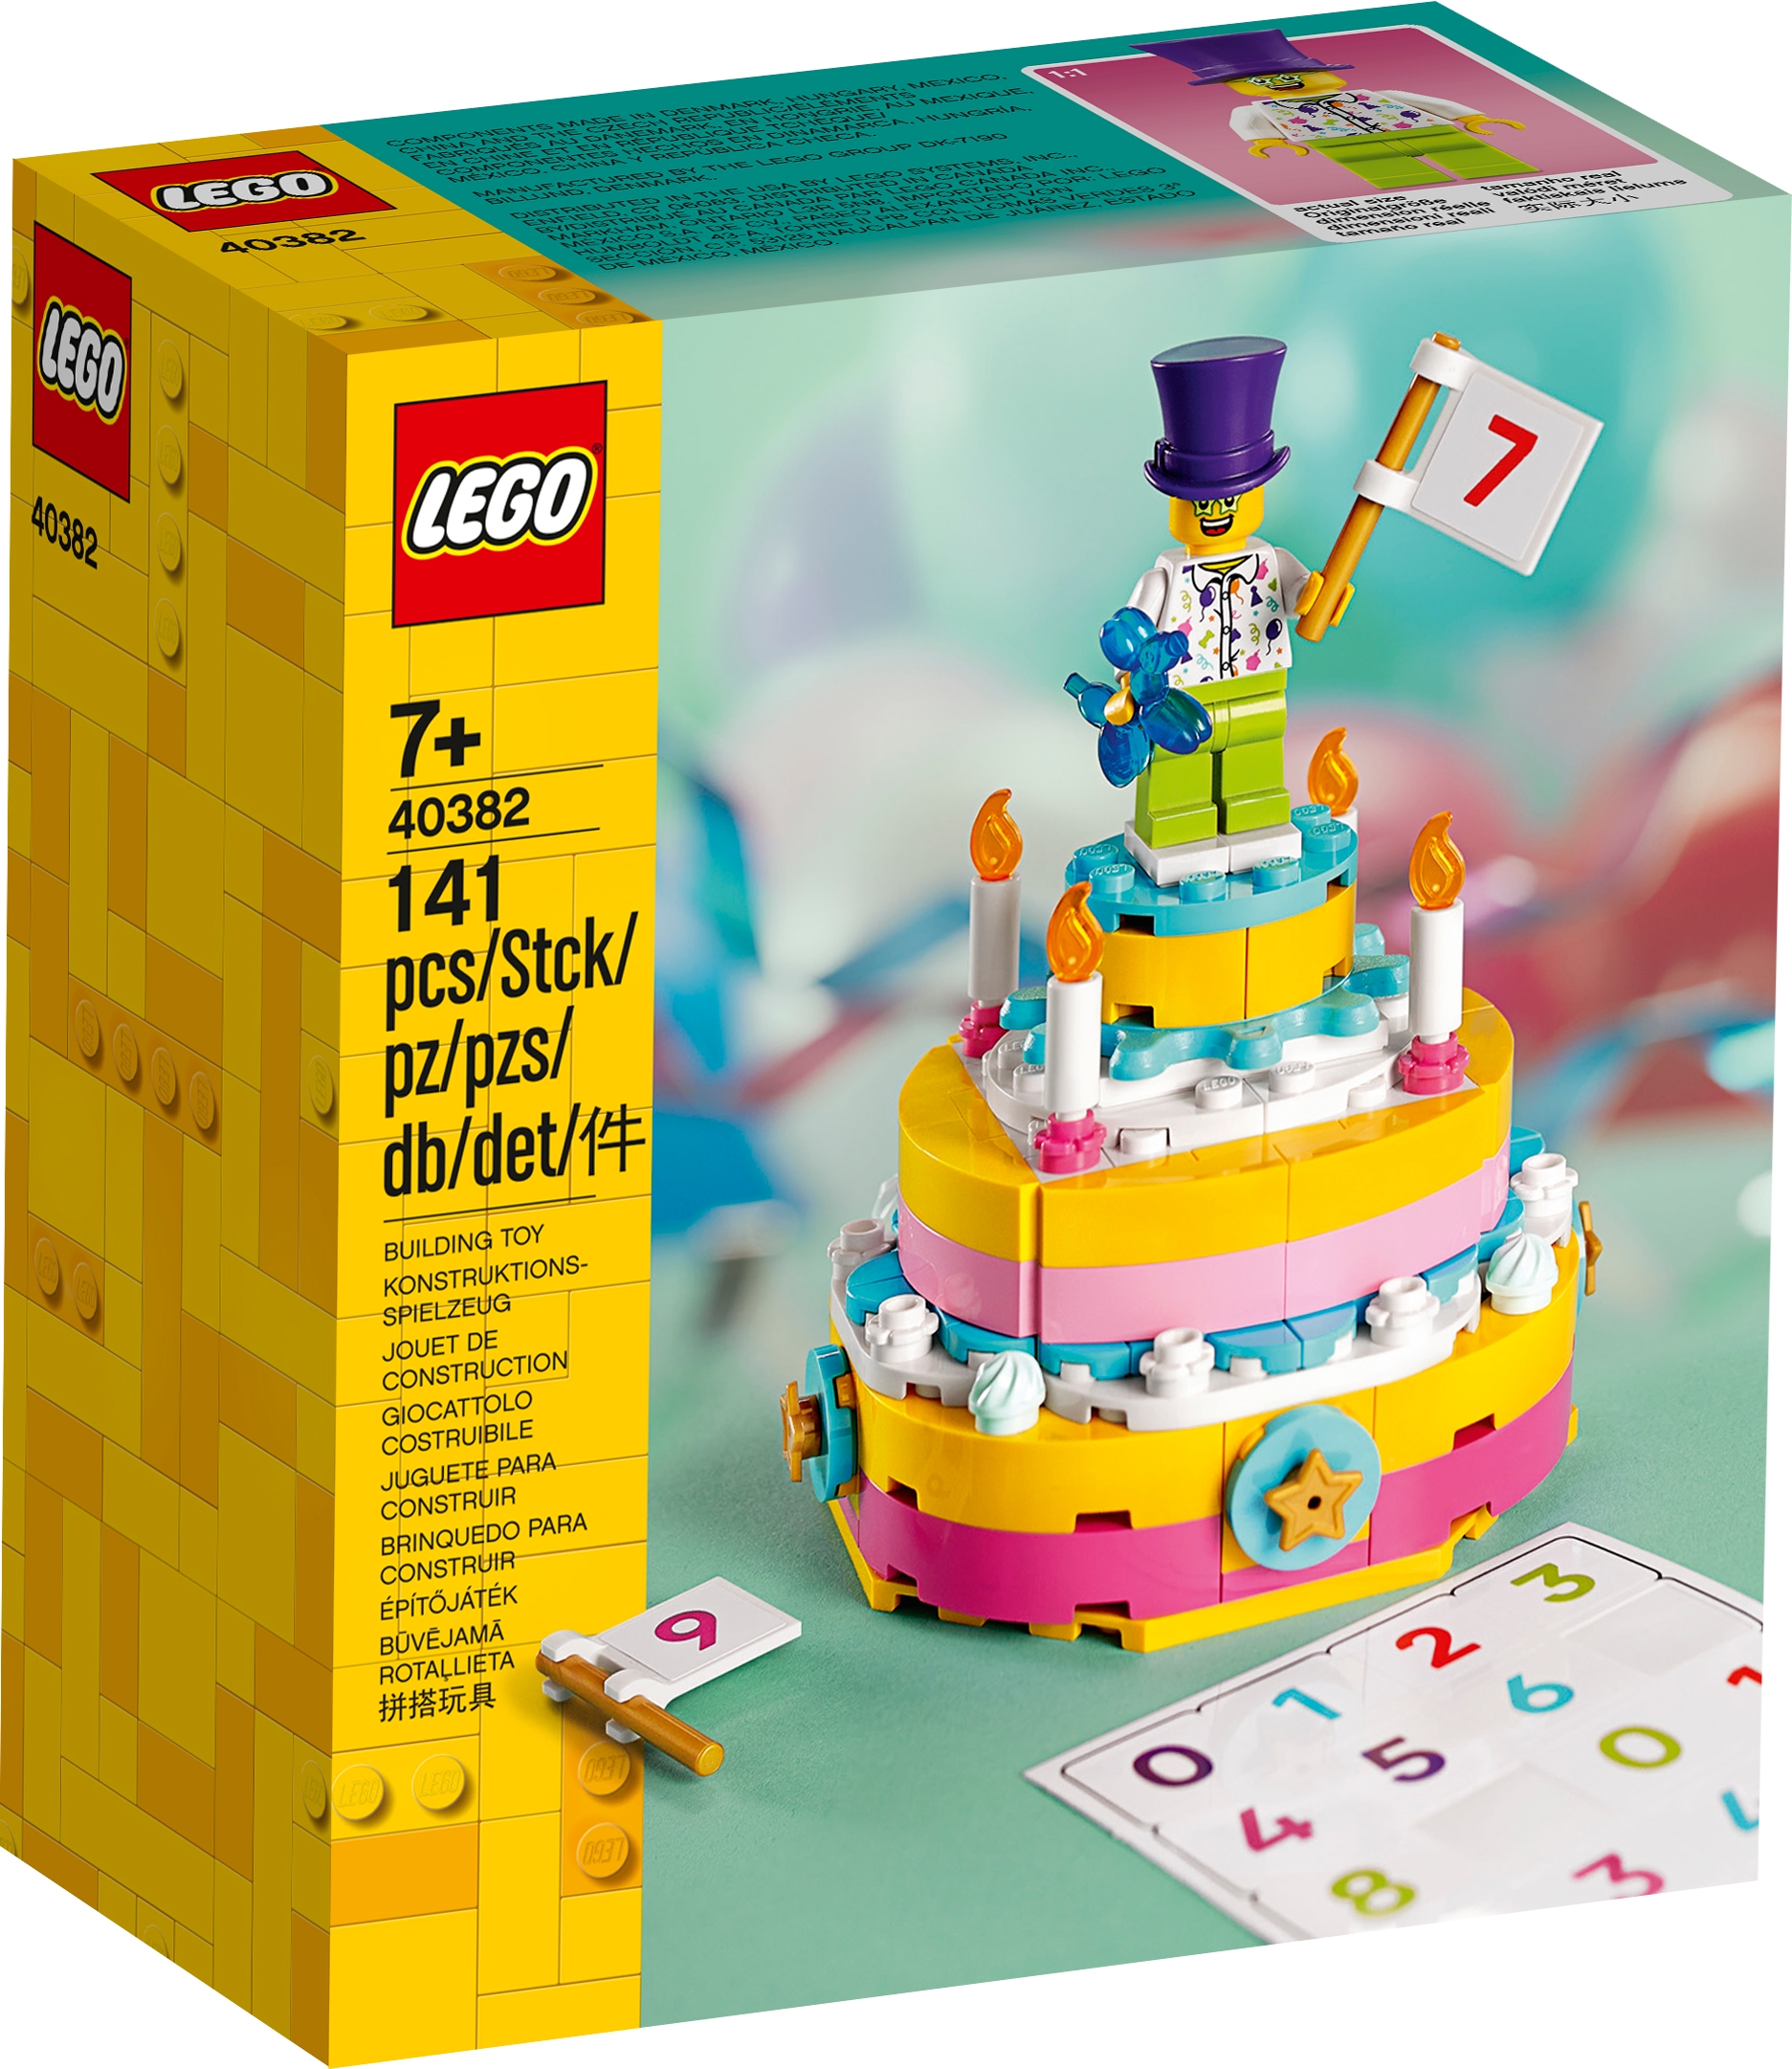 LEGO SET 850791 MINIFIGURE BIRTHDAY SET CAKE TOPPER NEW IN BOX 